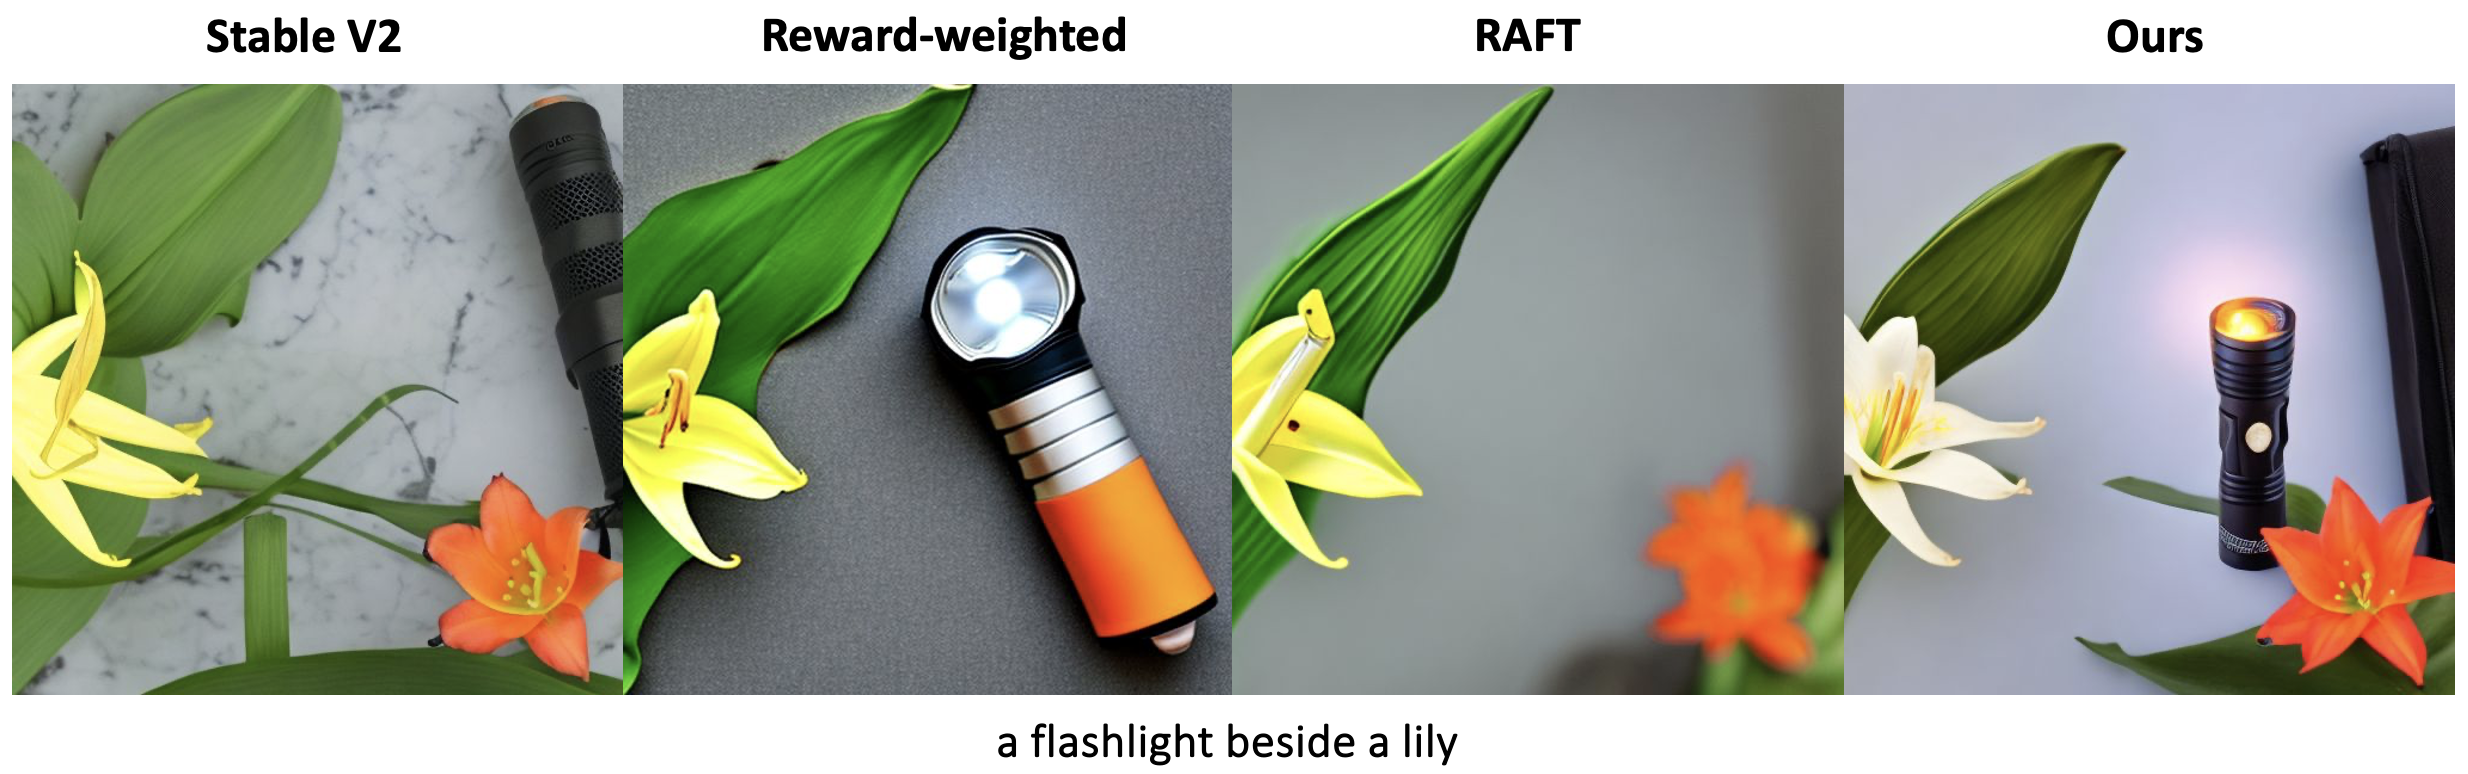 a flashlight beside a lily